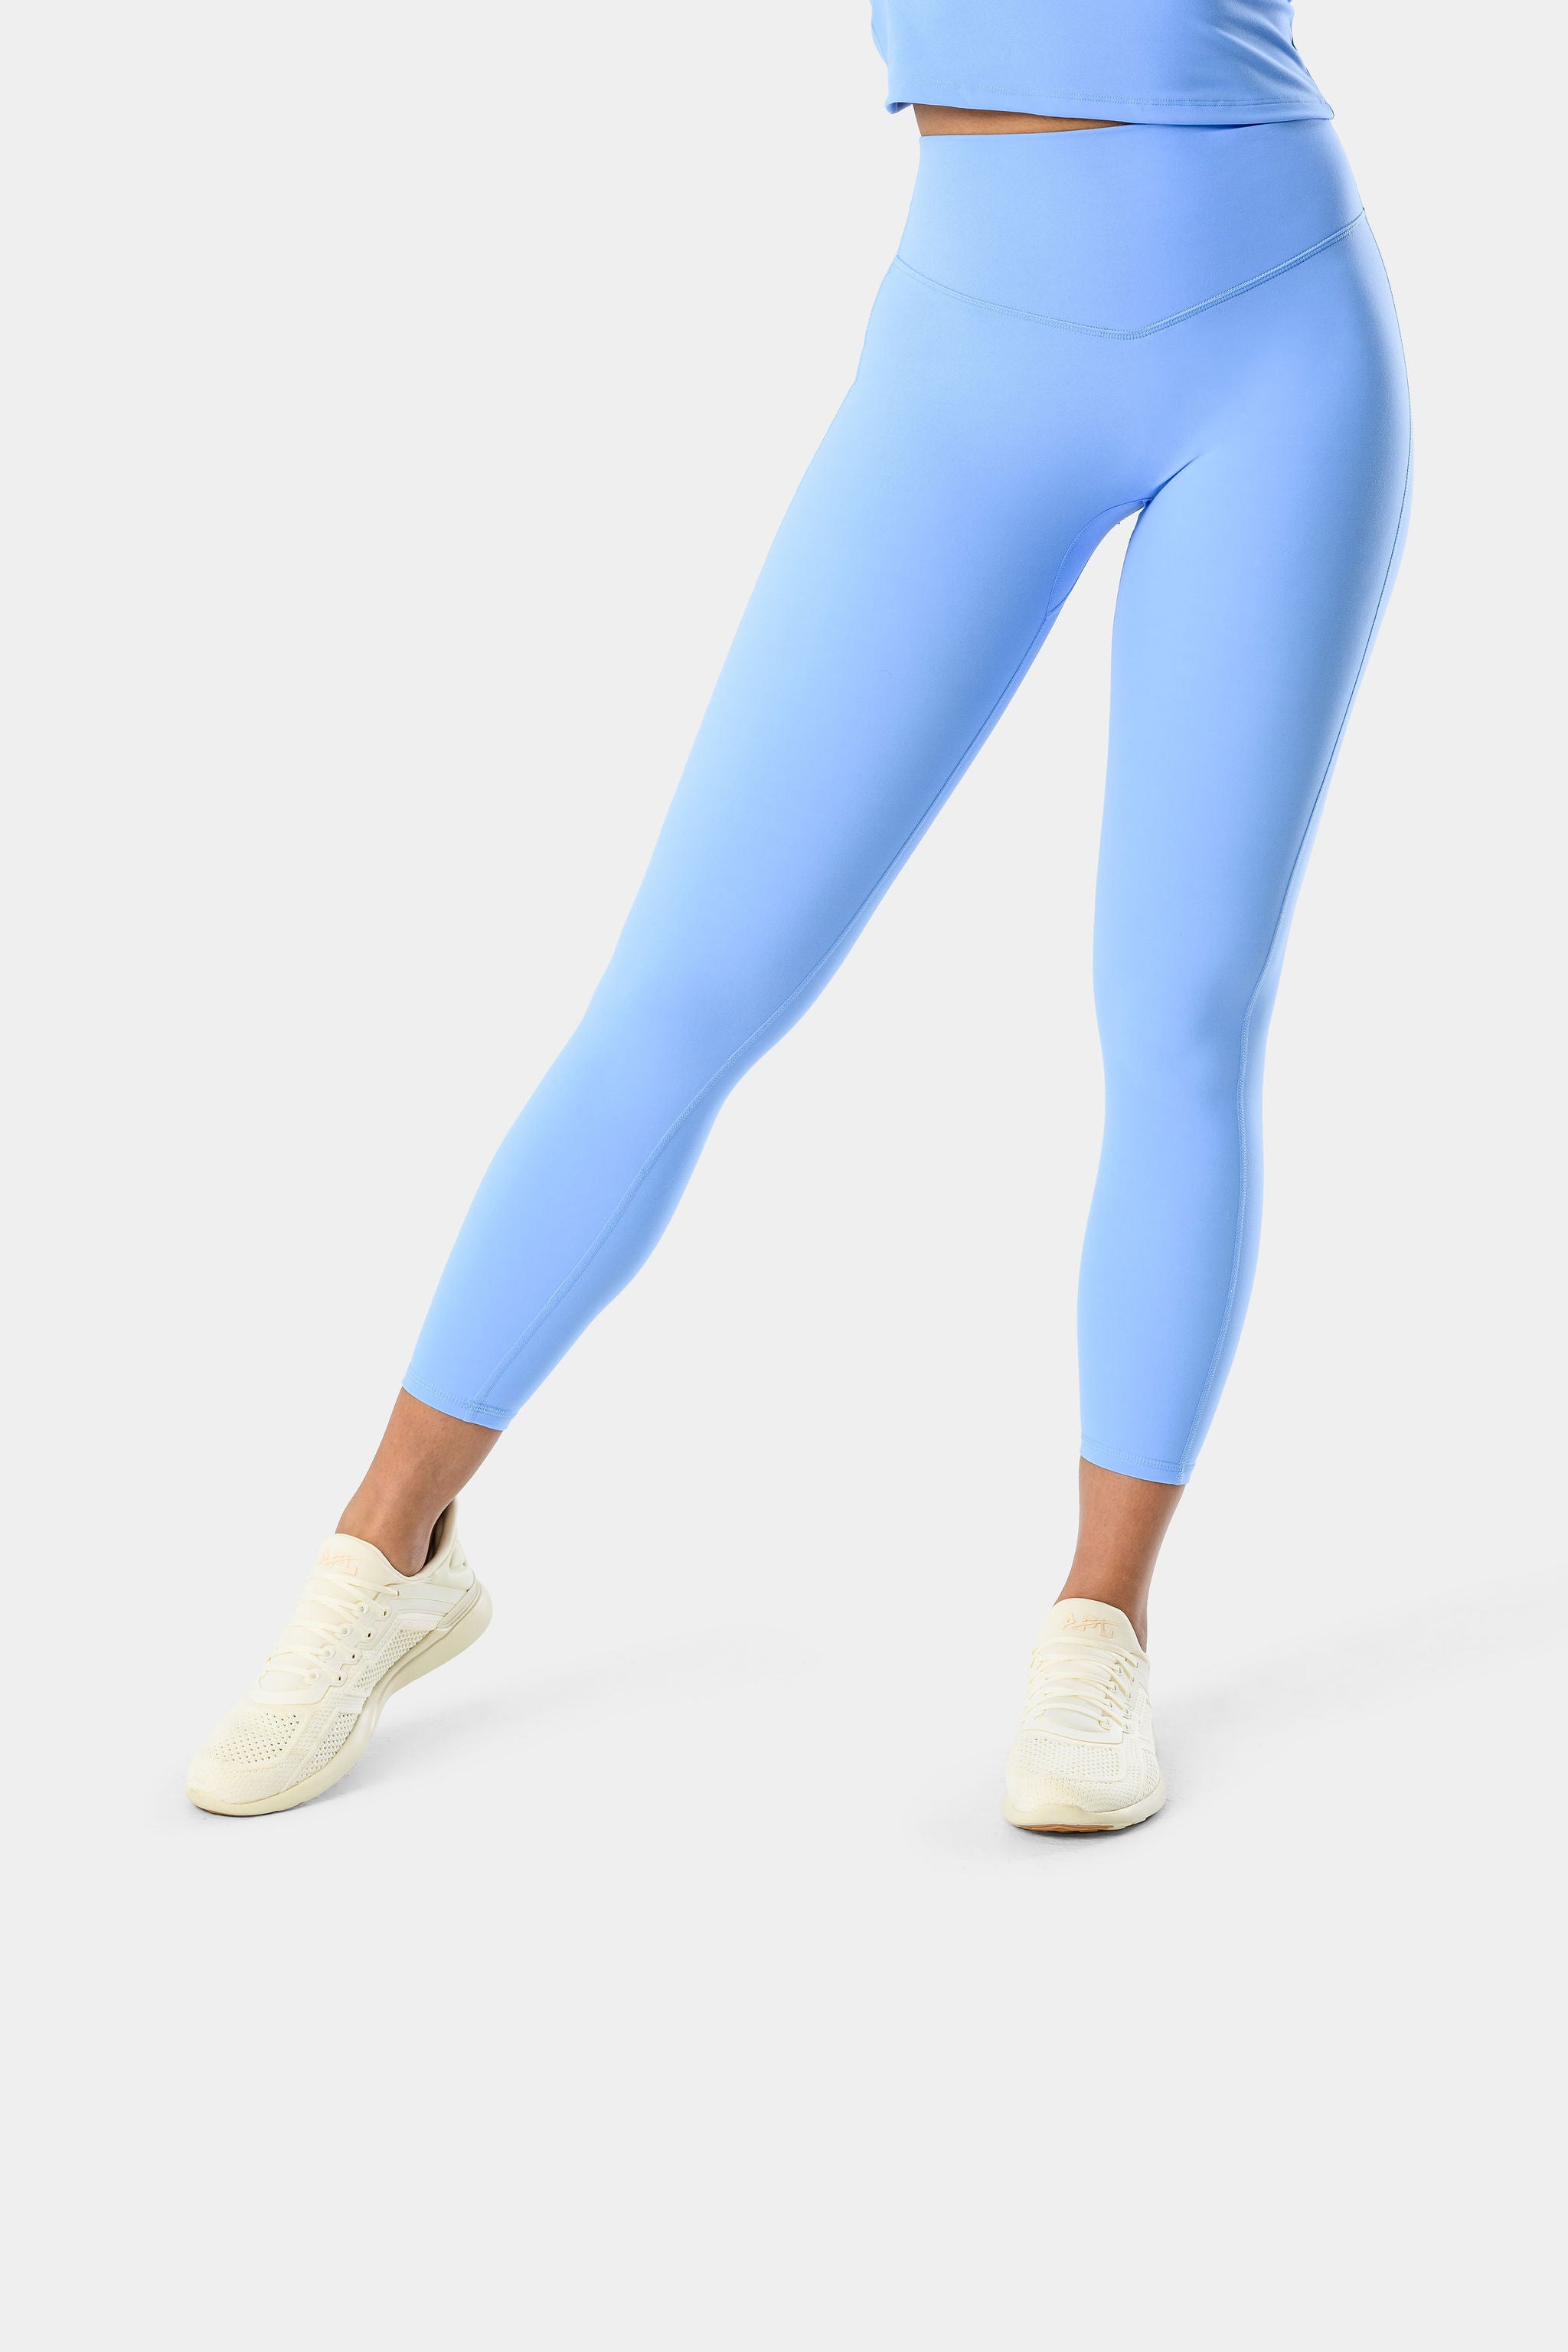 Kamo Fitness, Pants & Jumpsuits, Kamo Fitness Featherlite Enhance Leggings  25 Color Loden Frost Size M